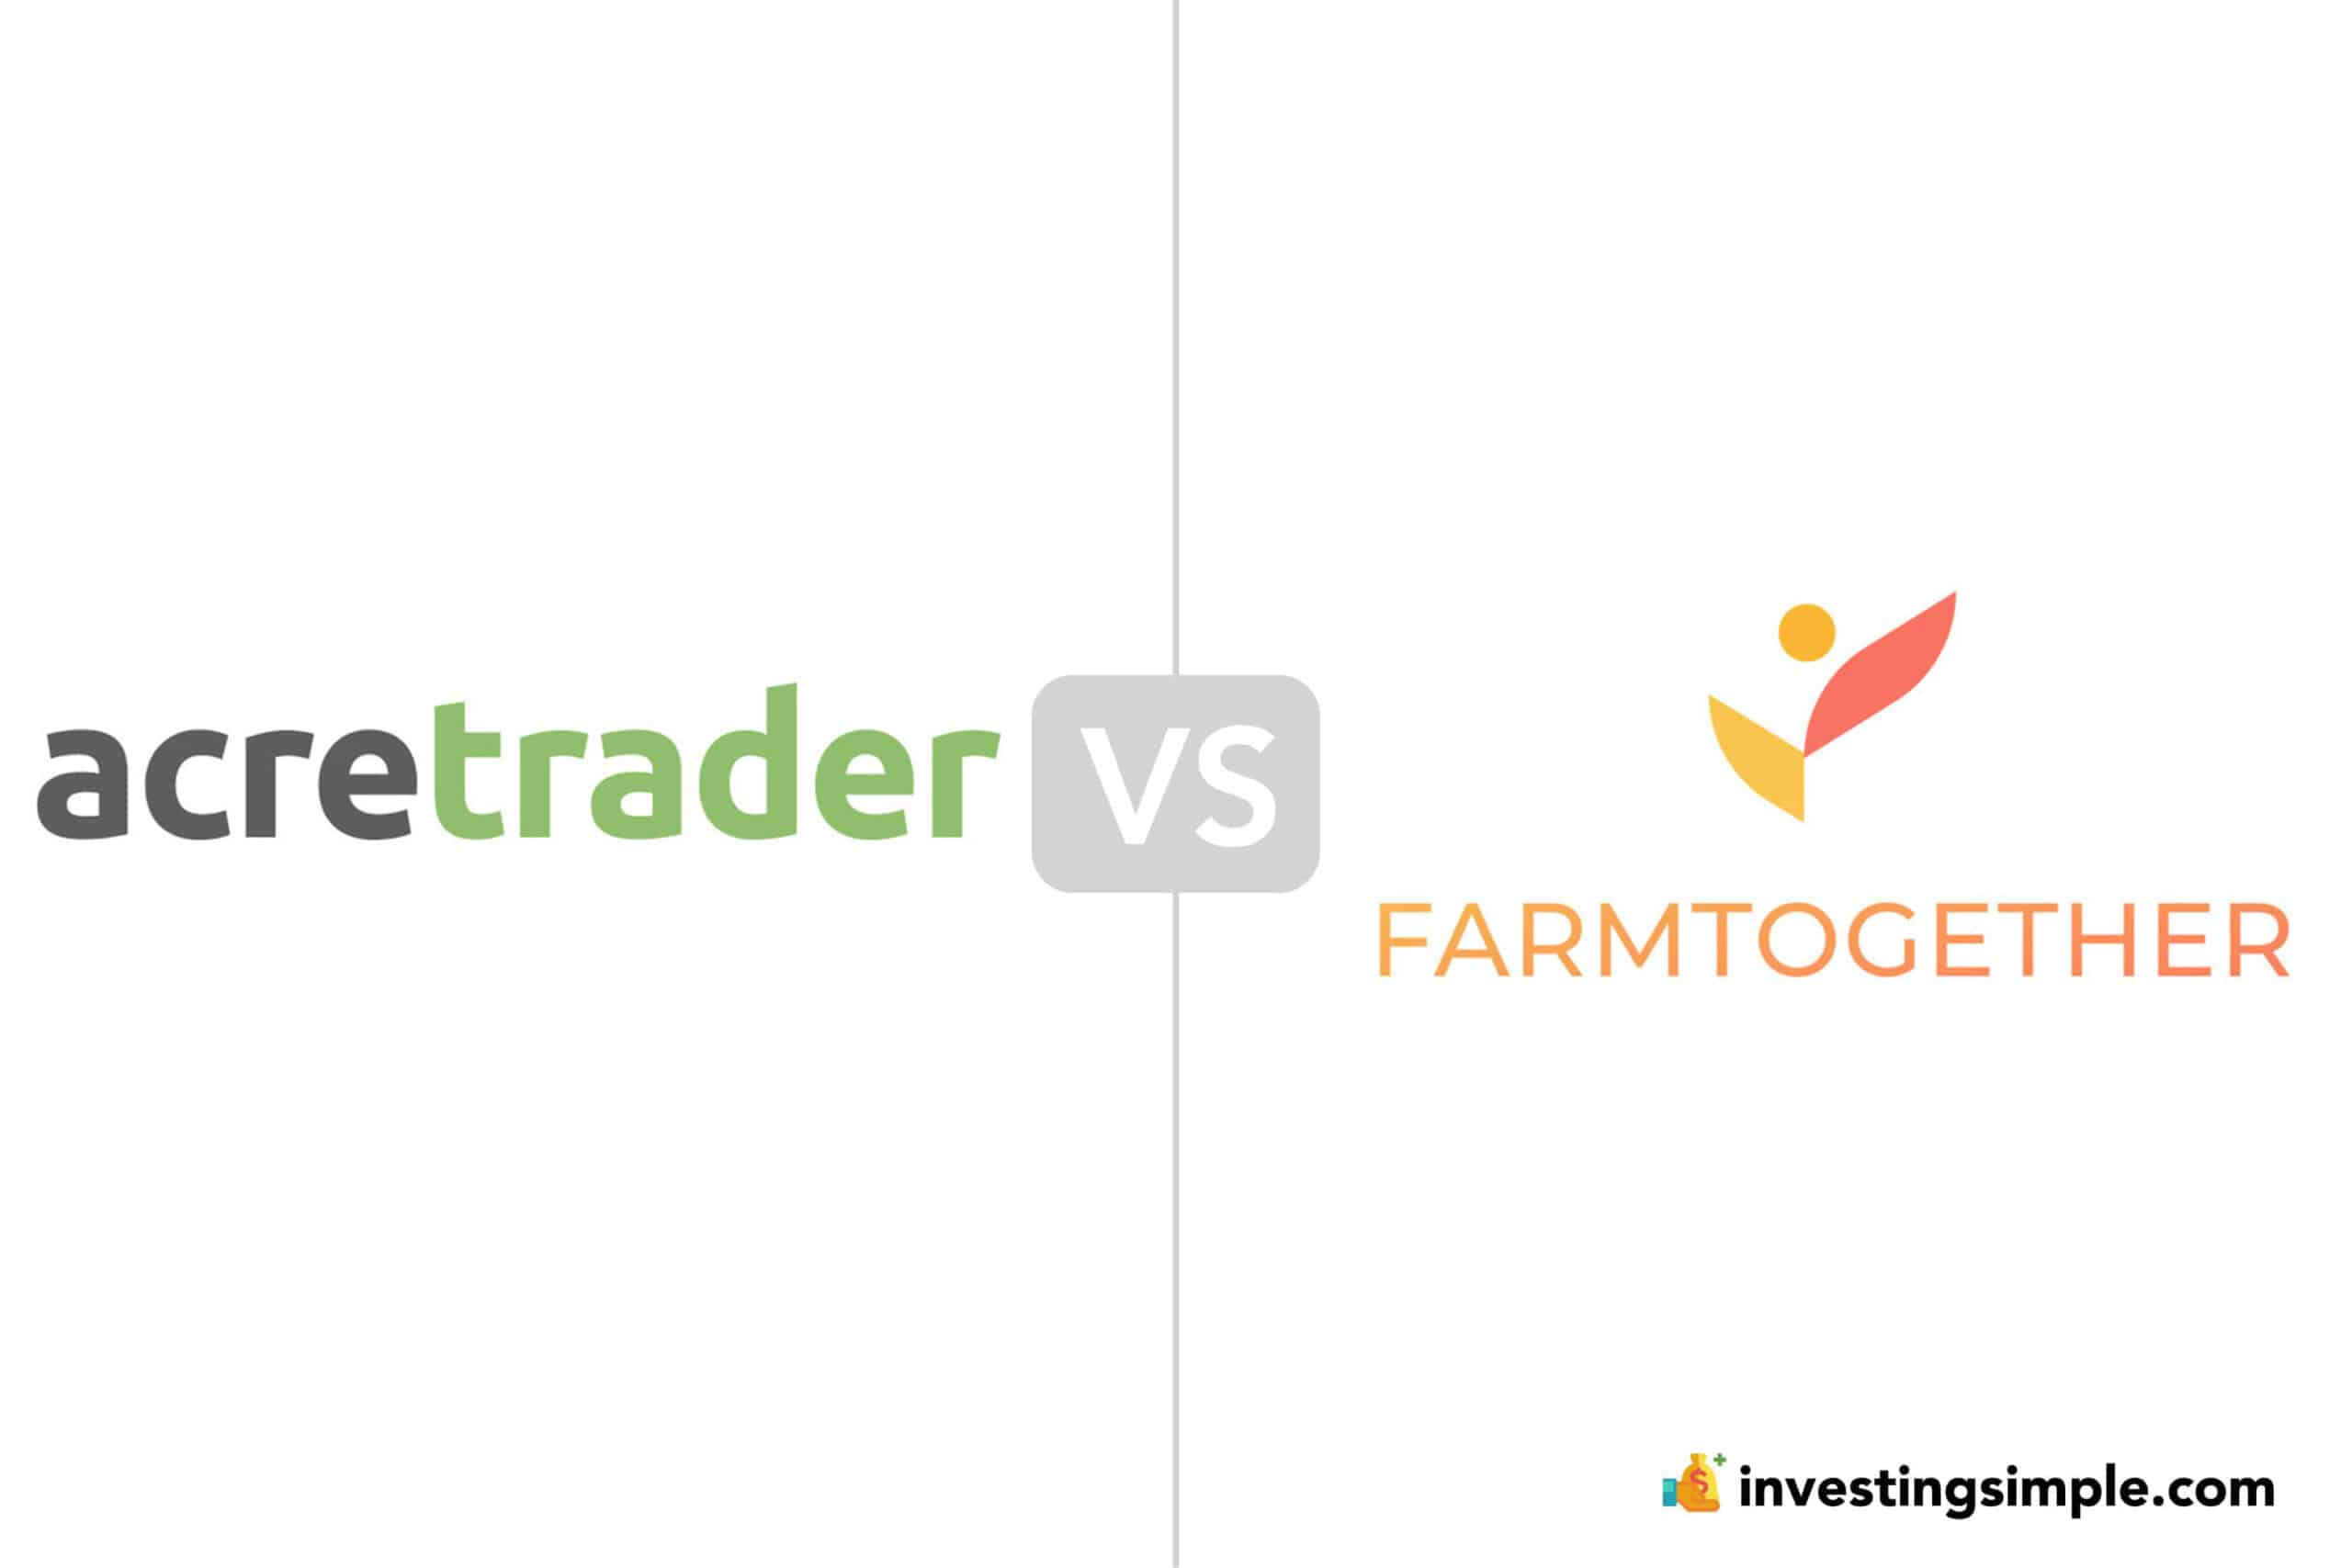 acretrader vs farmtogether best farmland investment